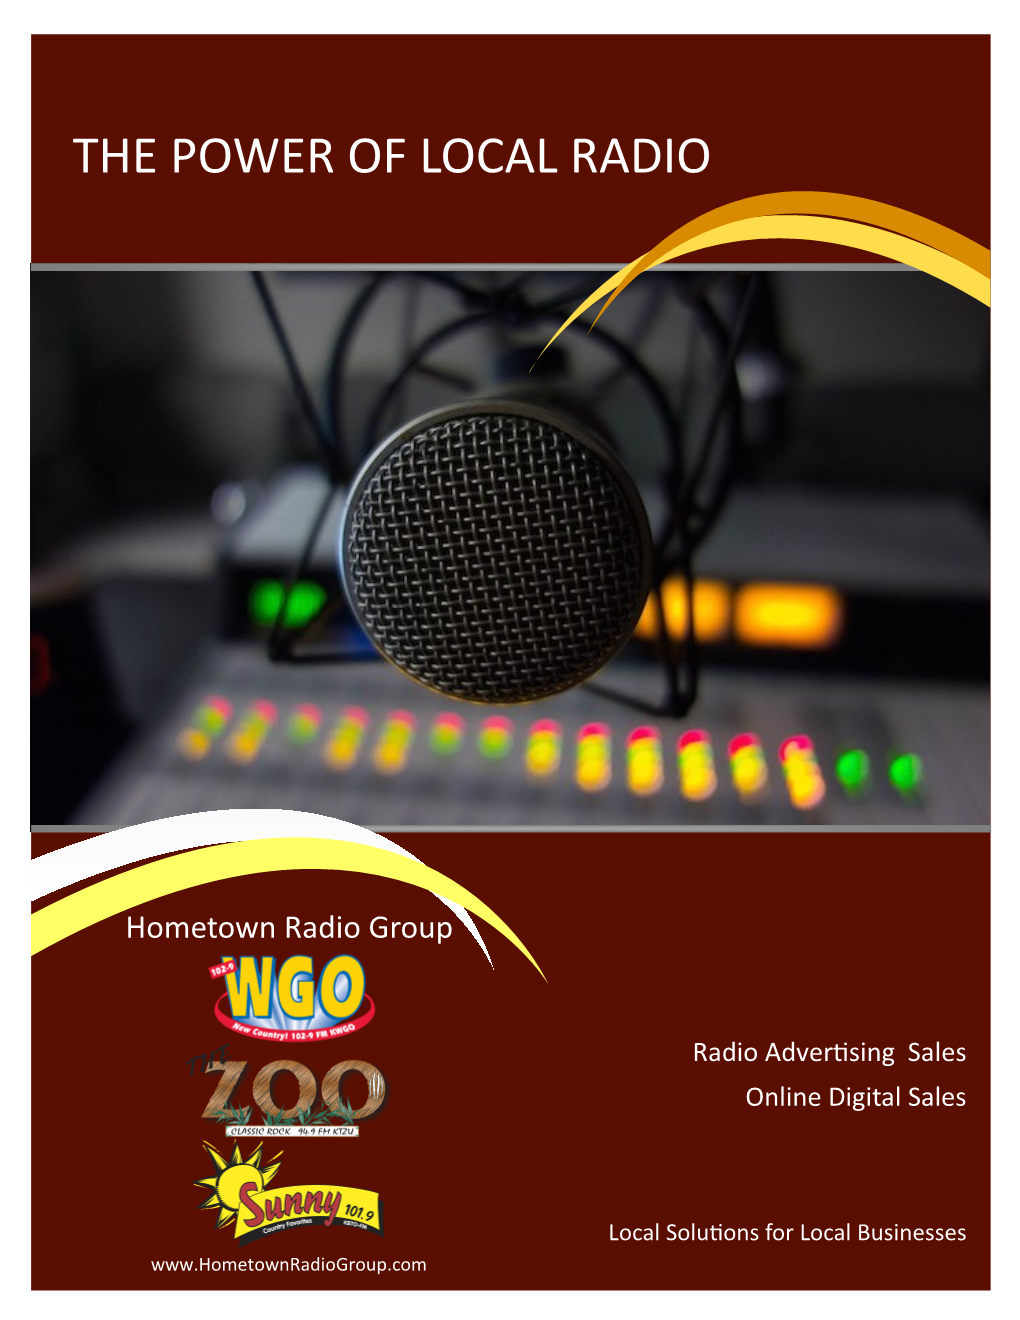 The Power of Local Radio